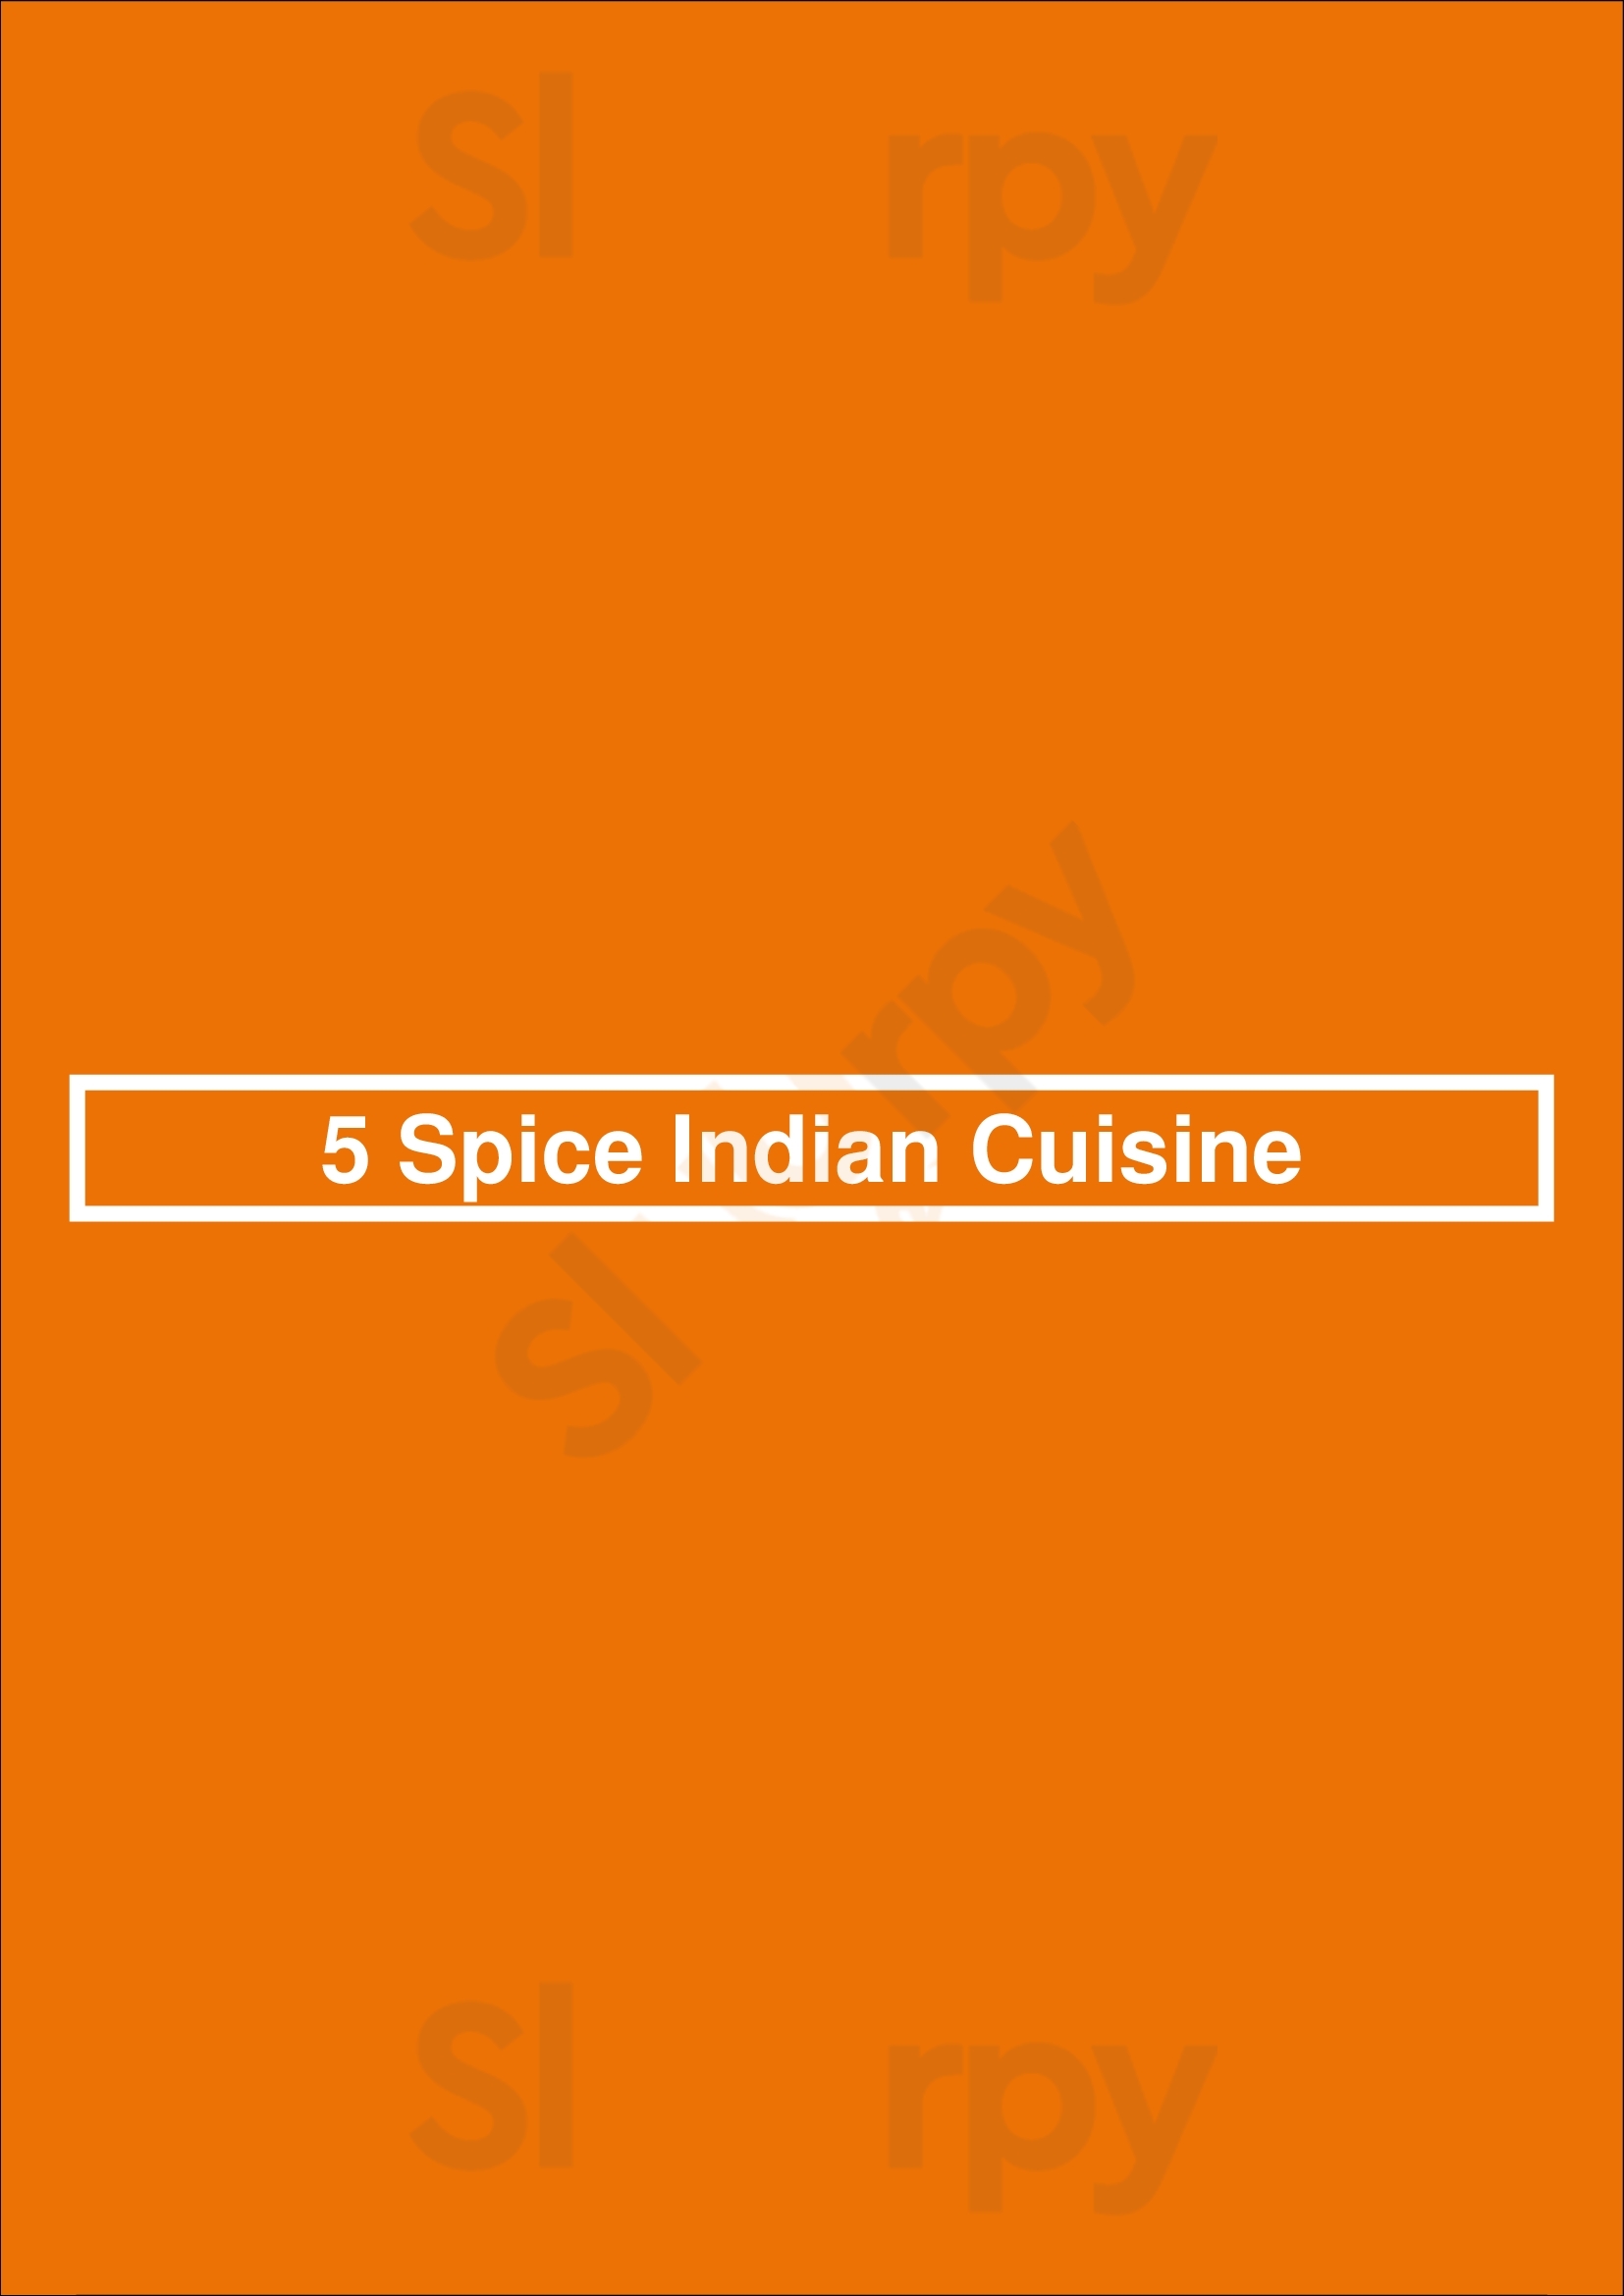 5 Spice Indian Cuisine Mount Barker Menu - 1